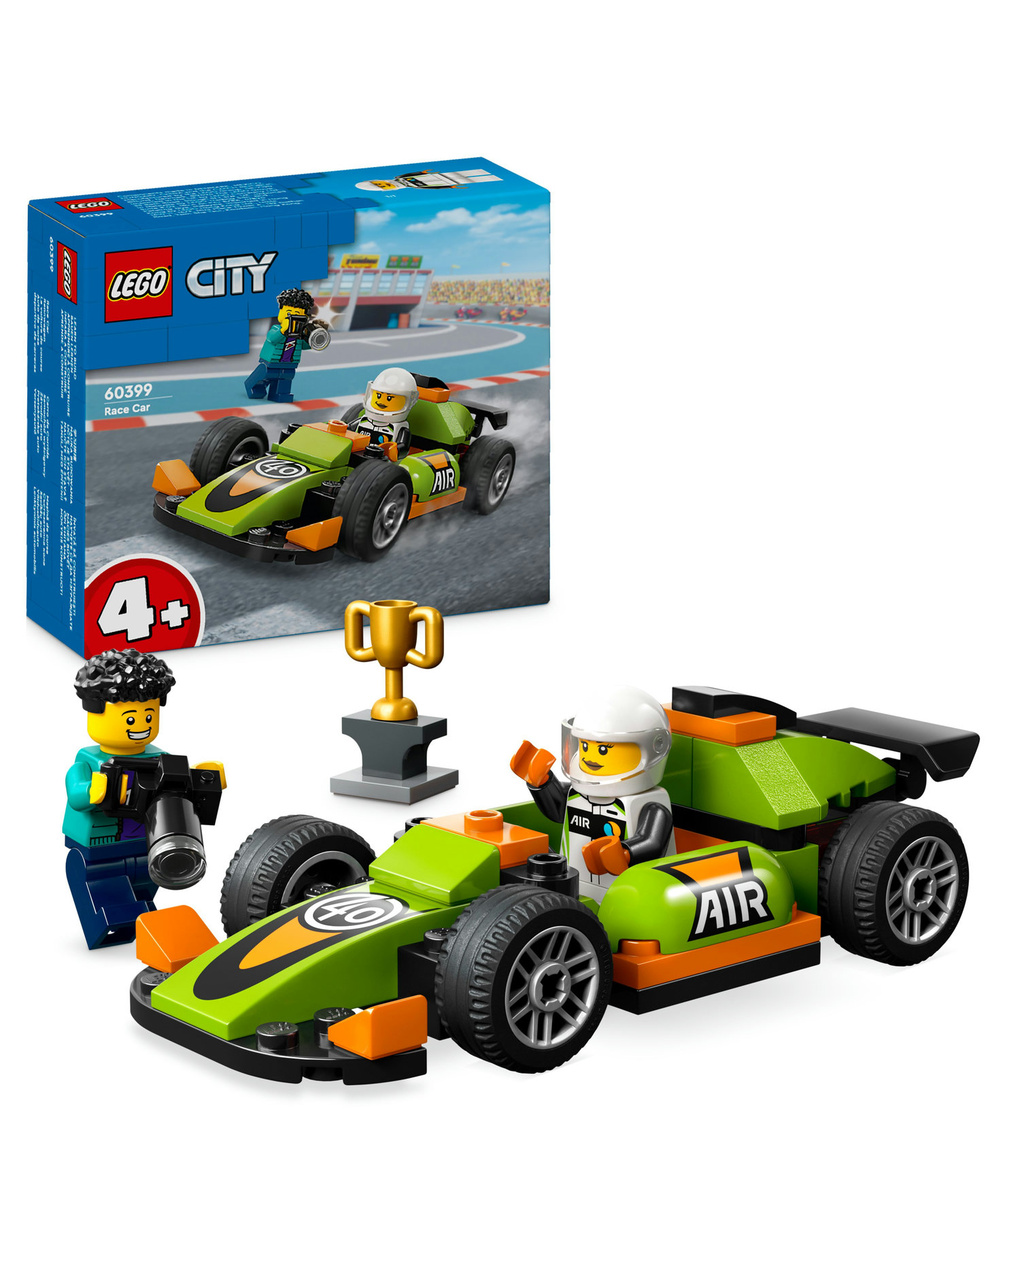 Auto da corsa verde - 60399 - lego city